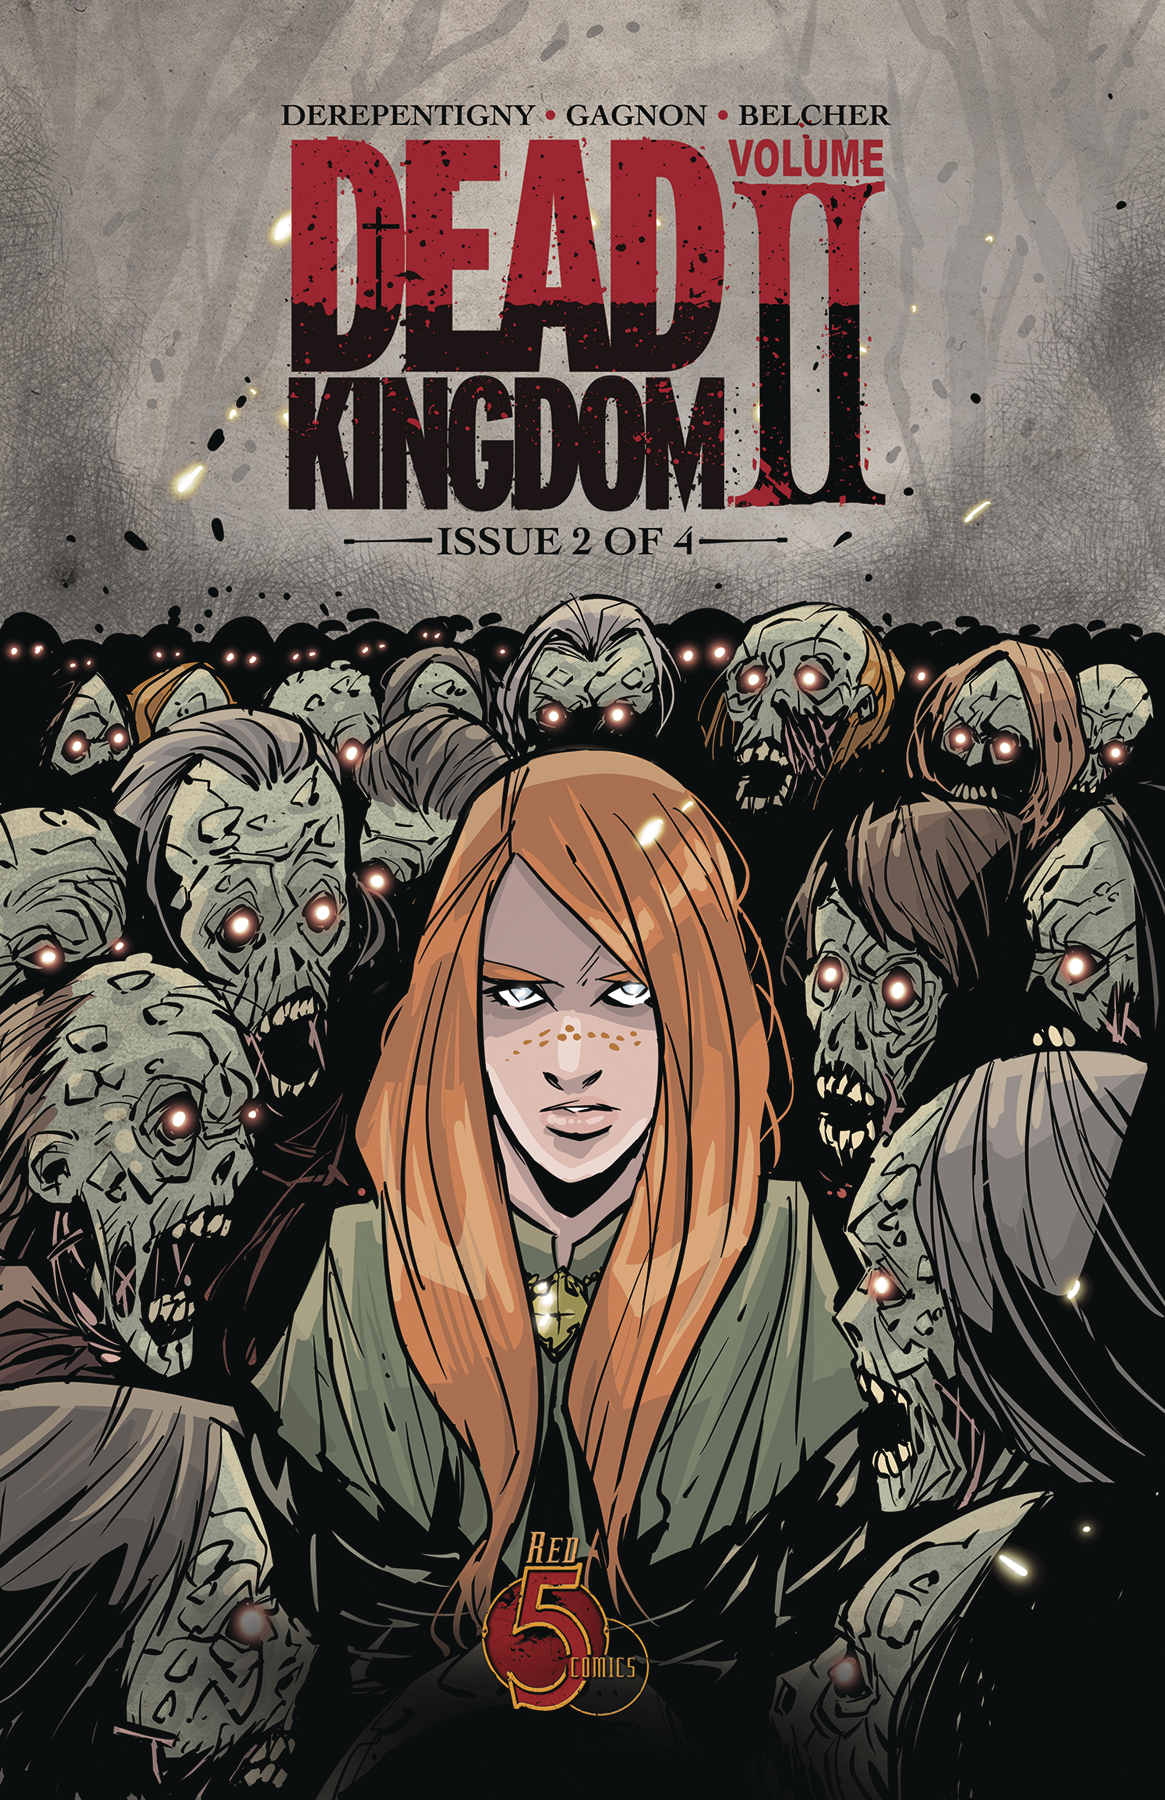 Dead Kingdom Volume 2 #2 Volume 7